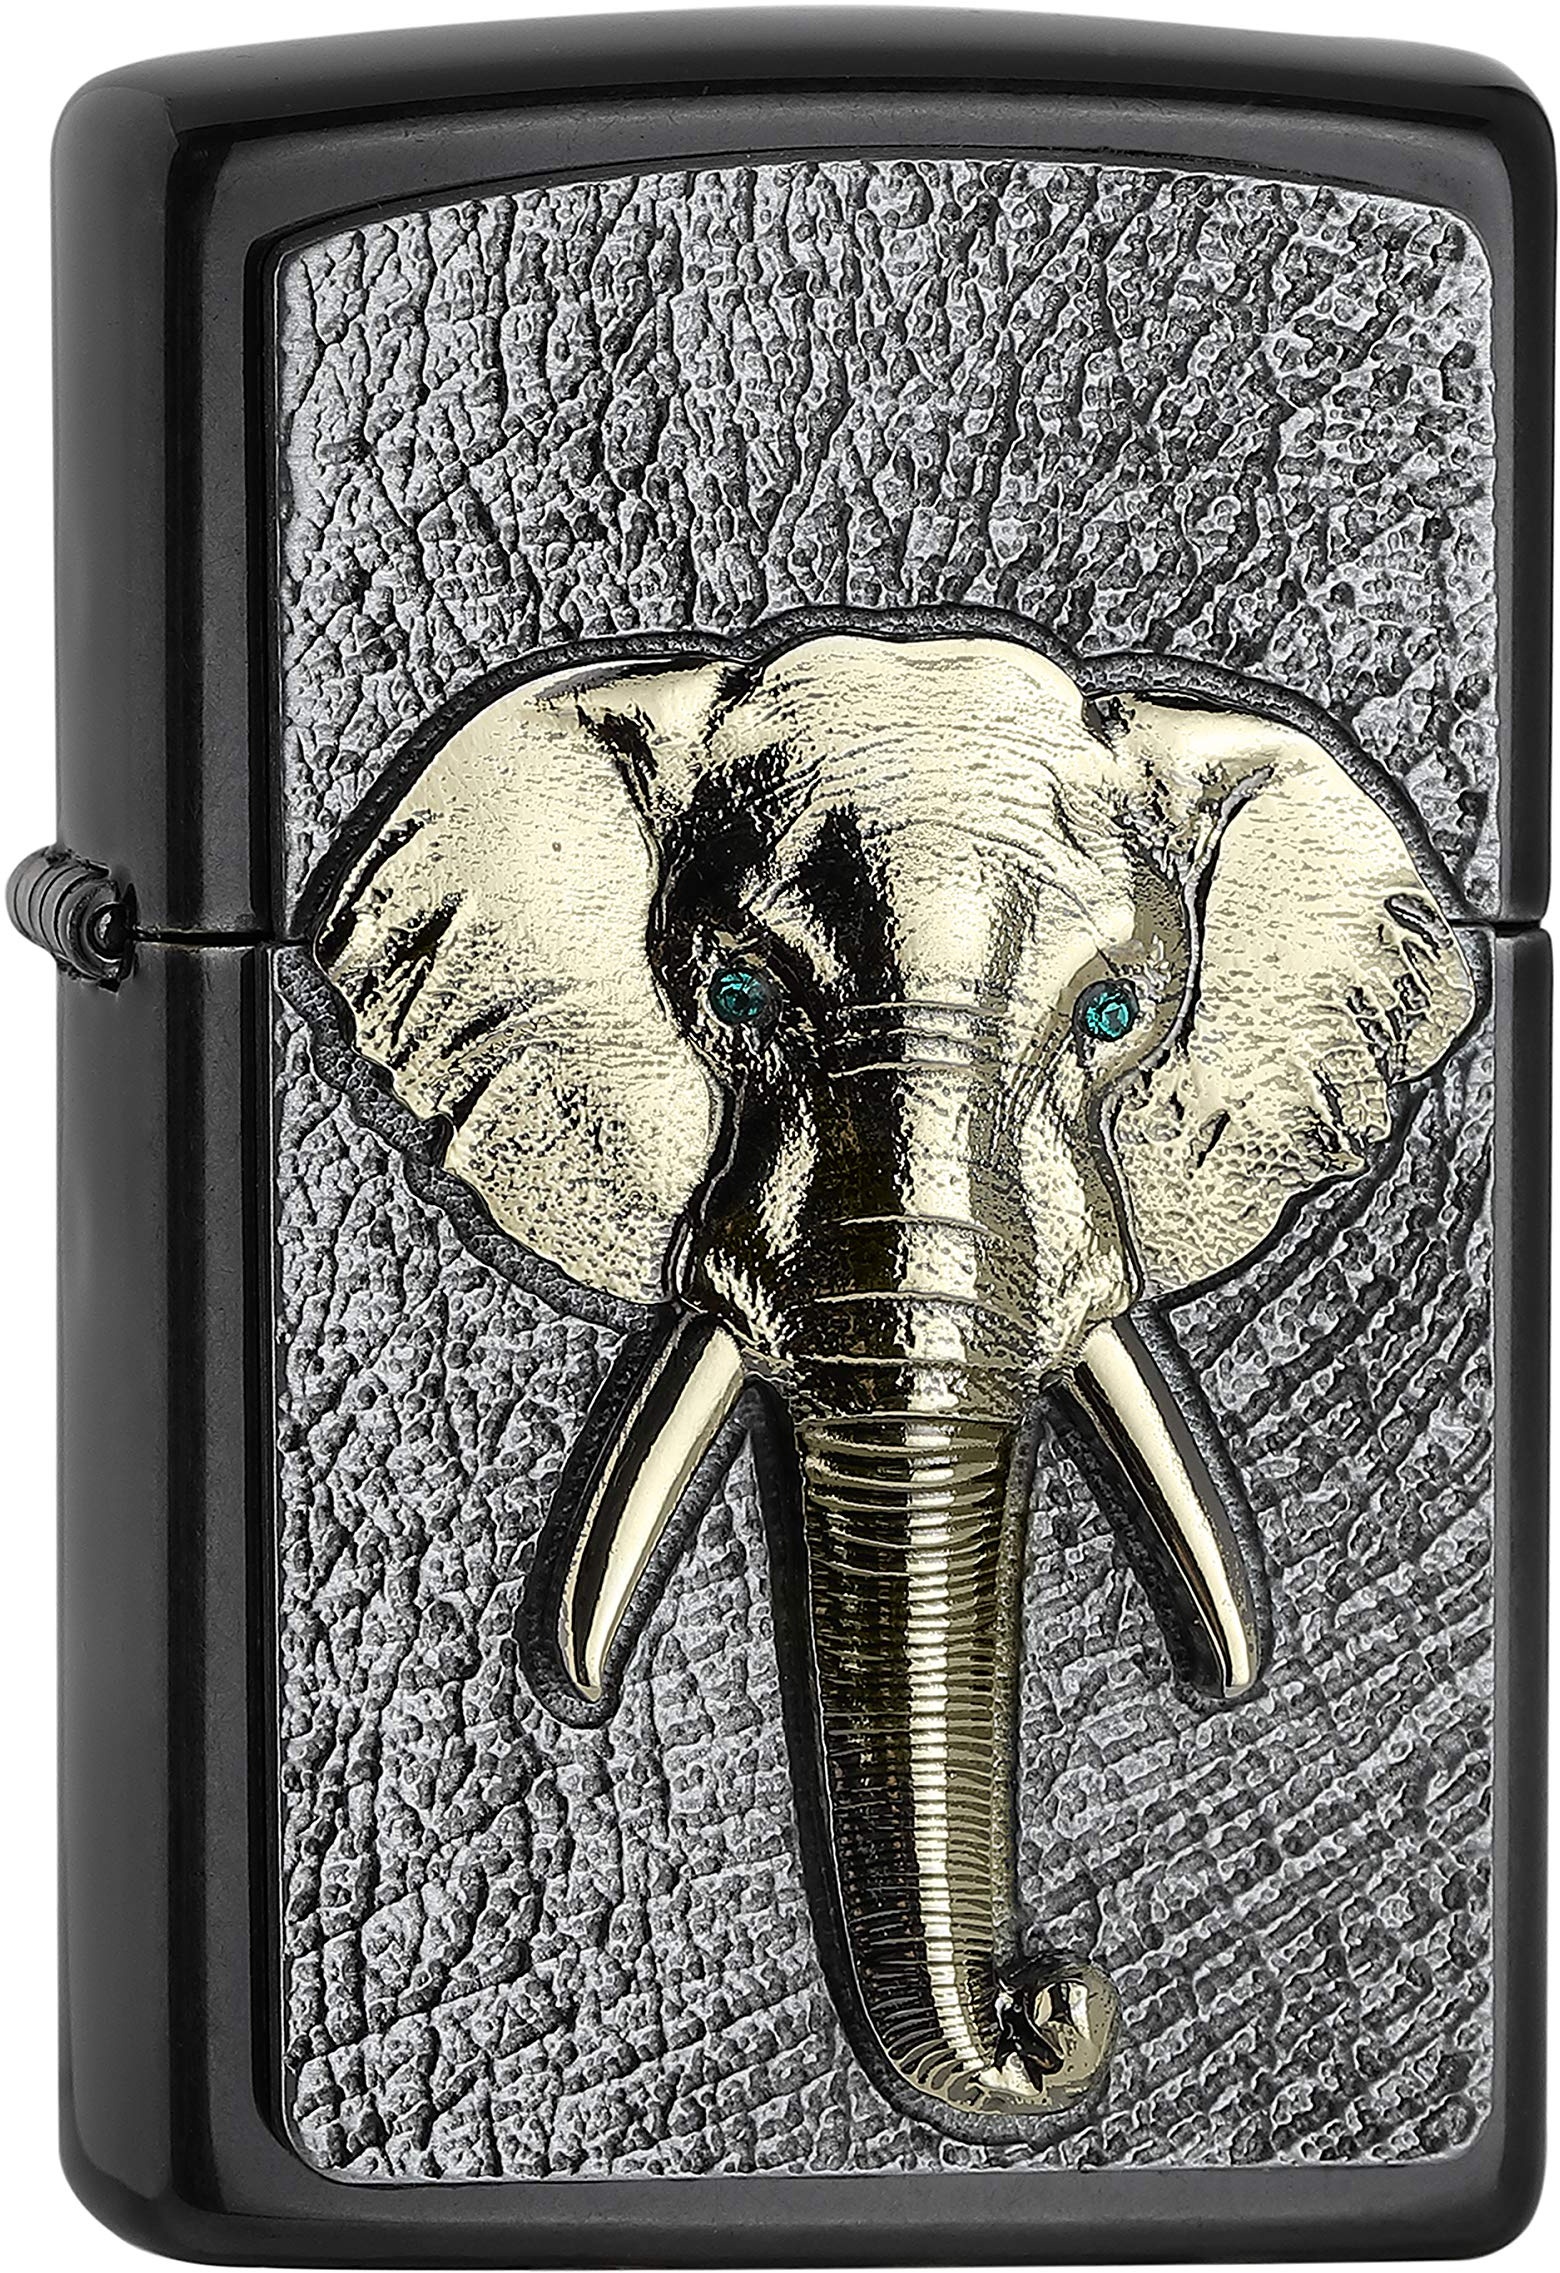 ZIPPO 2006551 – Sturmfeuerzeug, Elefant, Emblem Attached/Adorned with Swarovski® Crystal, Gray Dusk, nachfüllbar, in hochwertiger Geschenkbox, Original Pocketsize